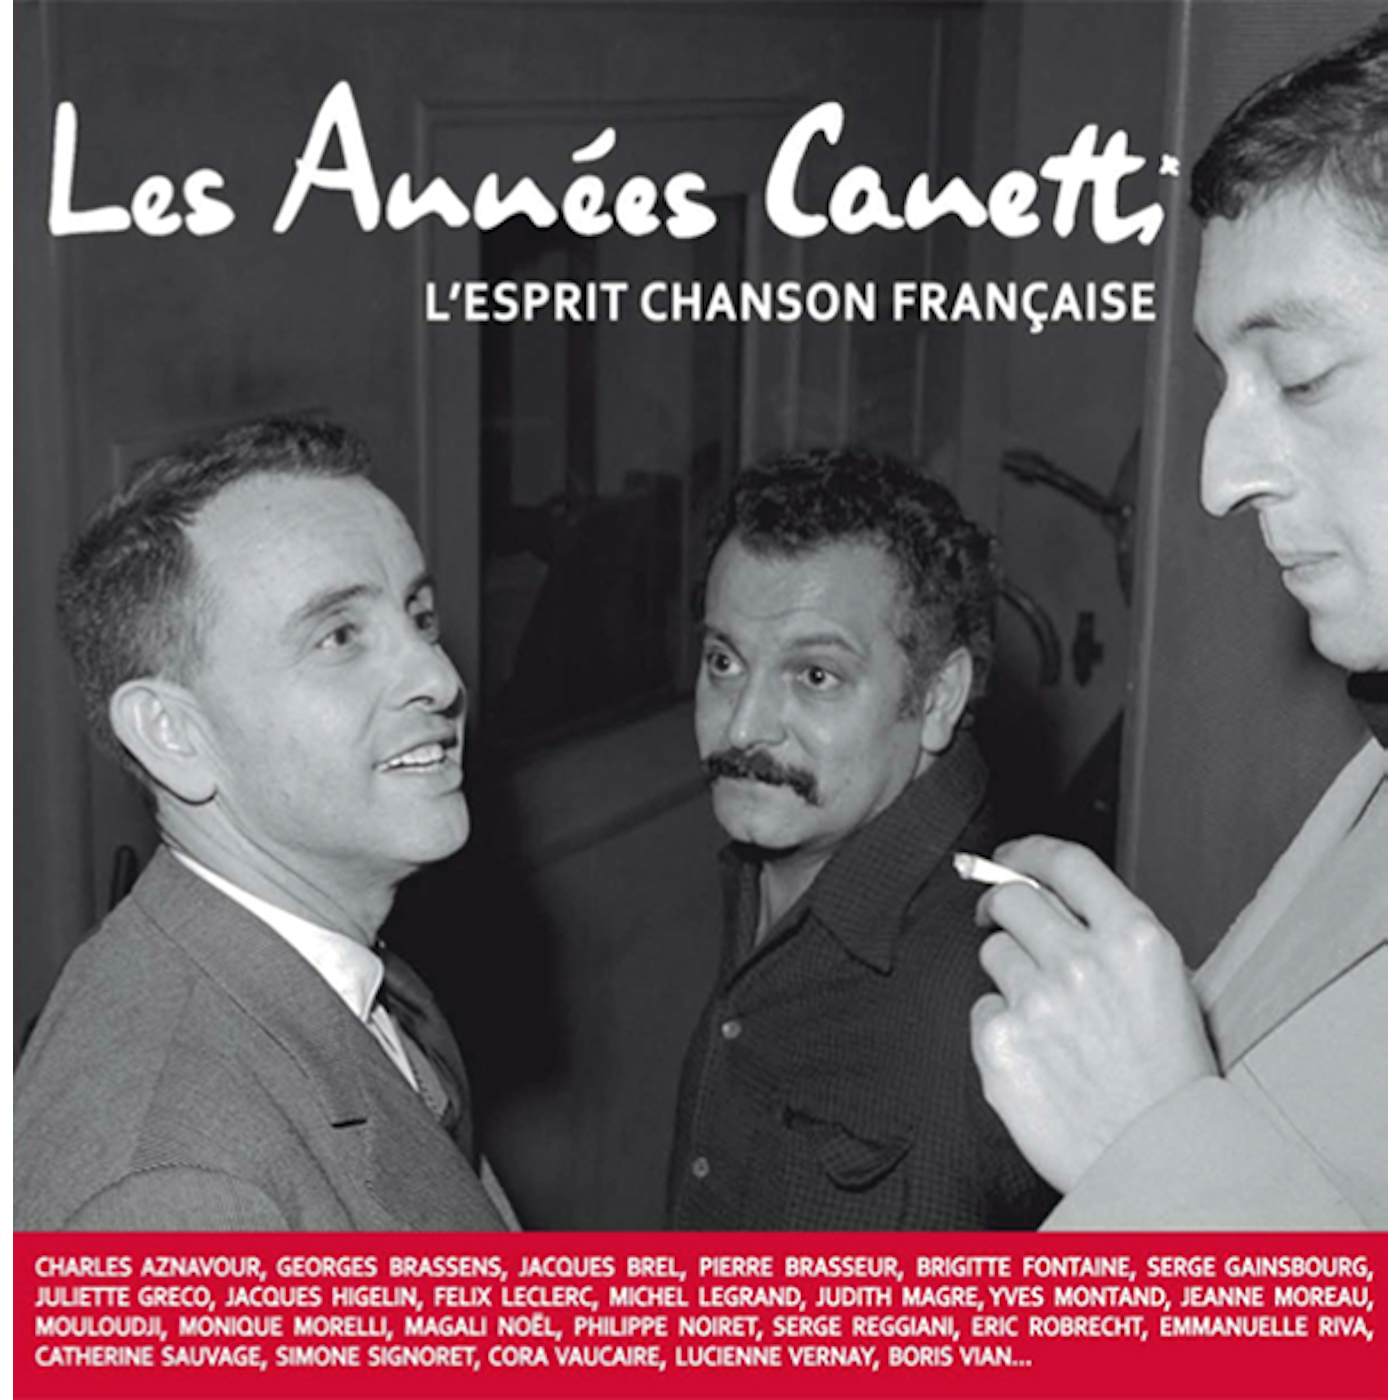 LES ANNEES CANETTI: L'ESPRIT CHANSON FRAN / VAR Vinyl Record